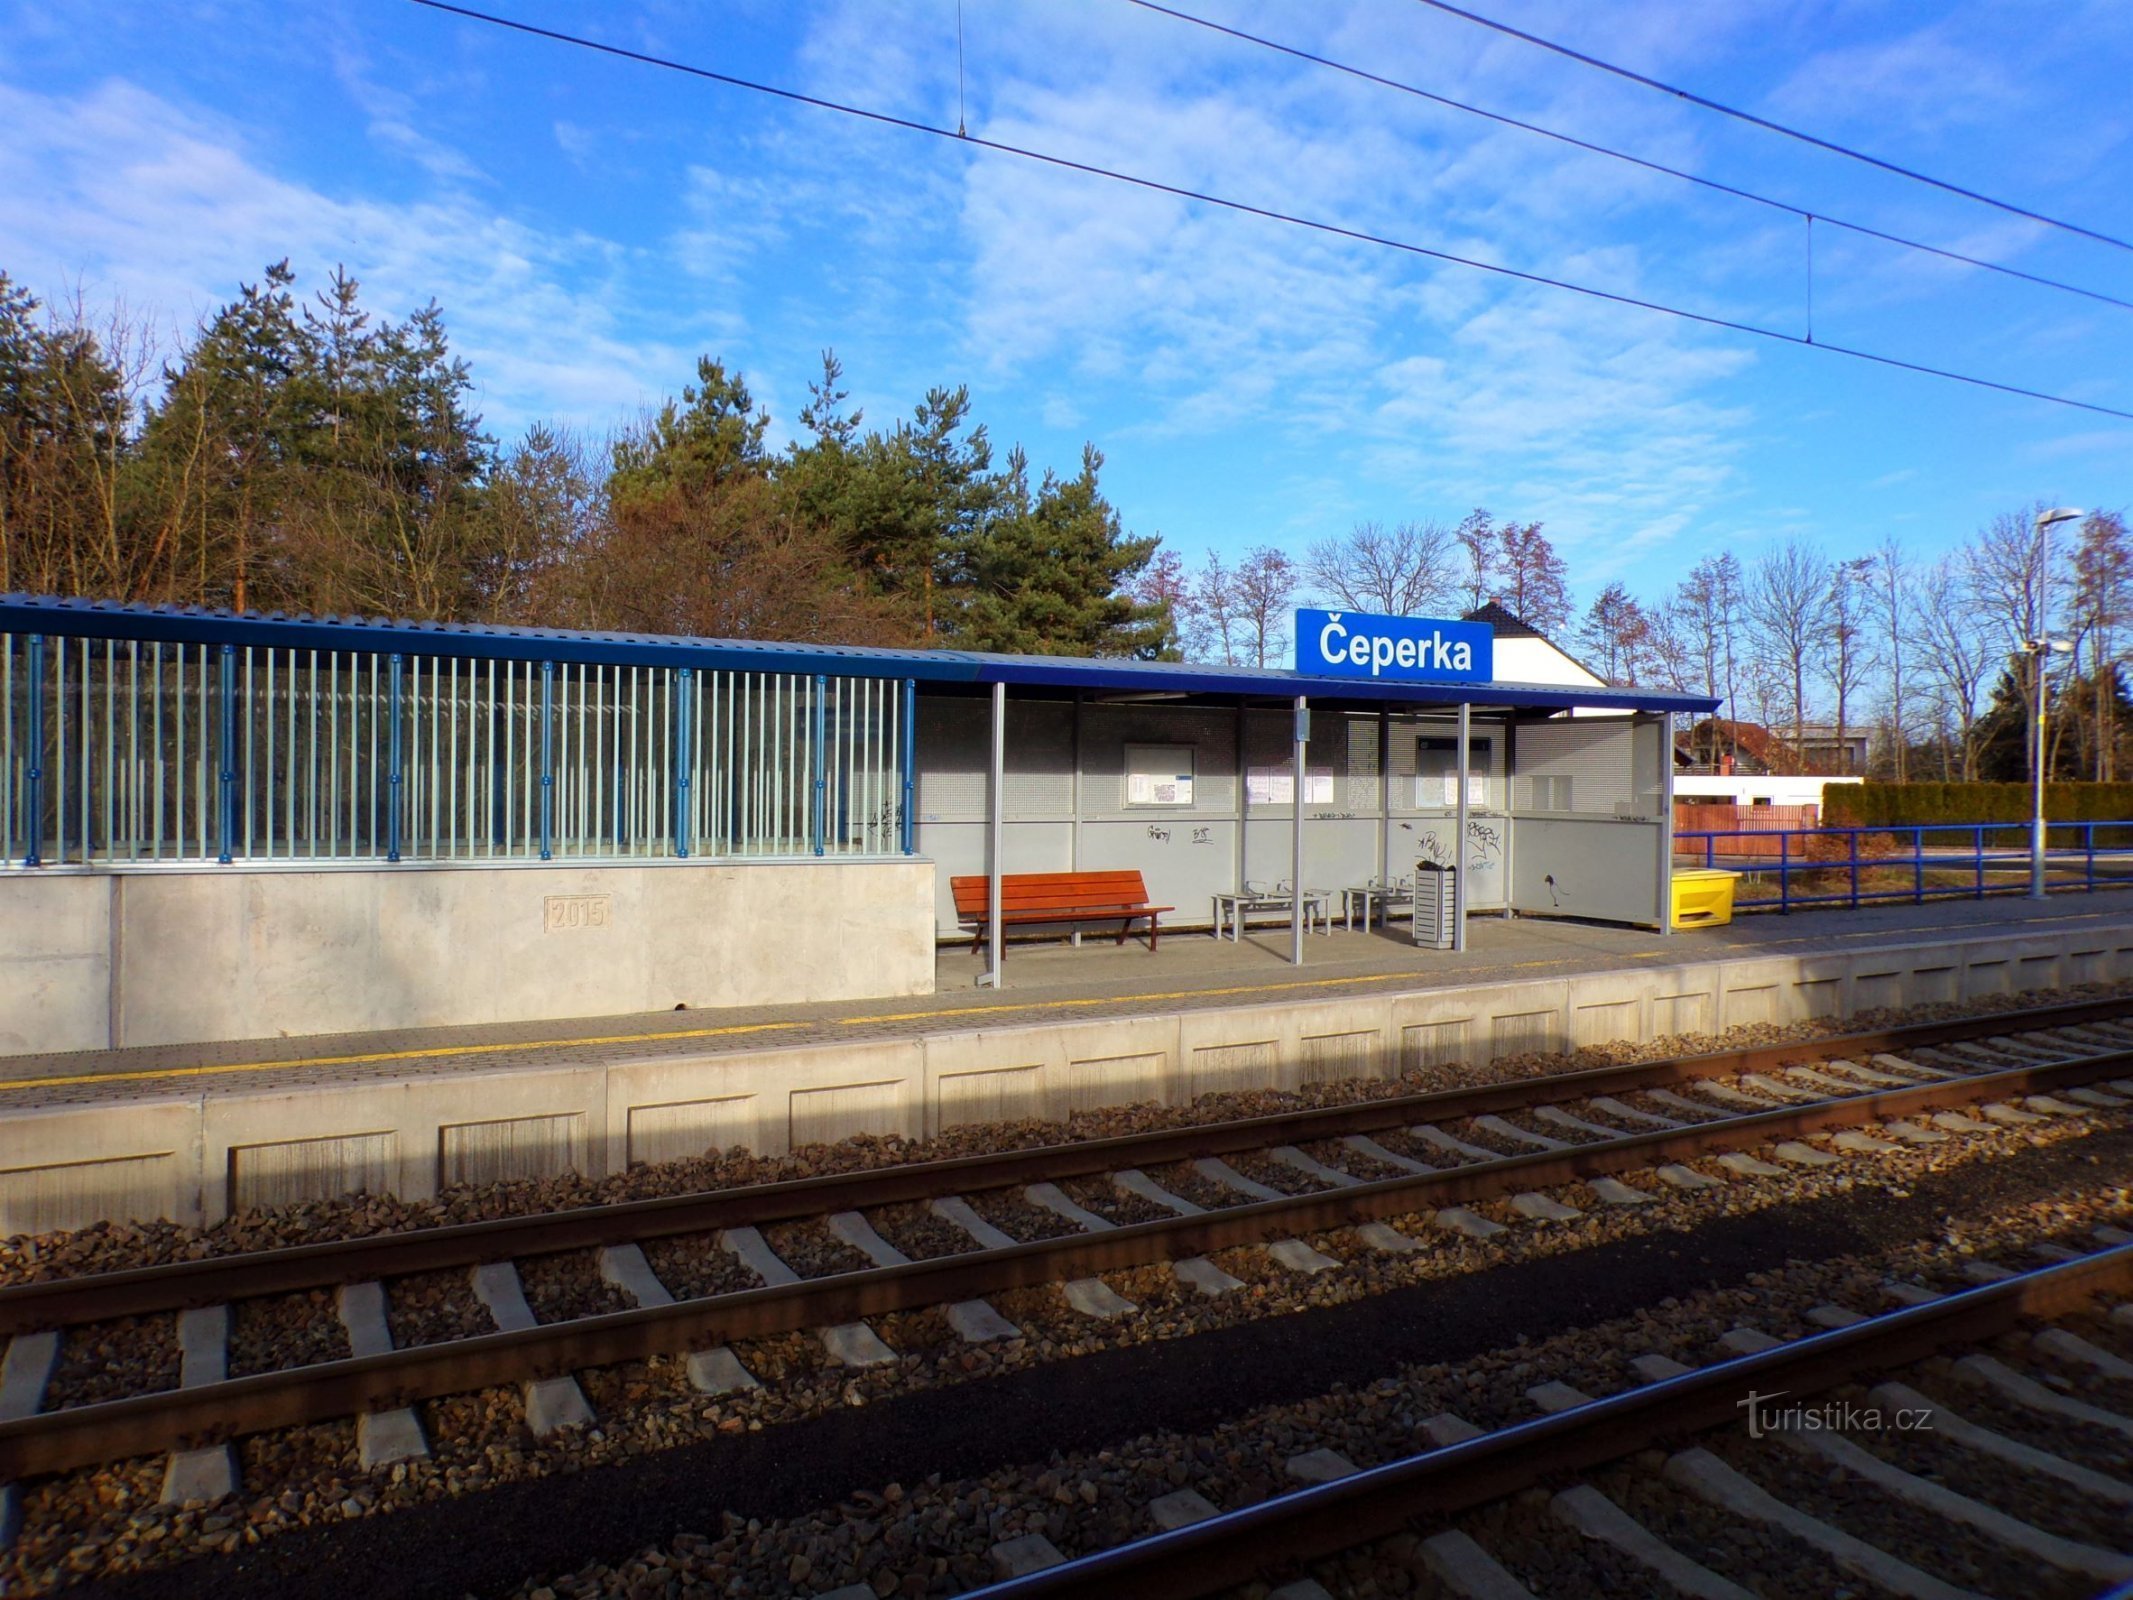 Railway station (Čeperka, 18.2.2022/XNUMX/XNUMX)